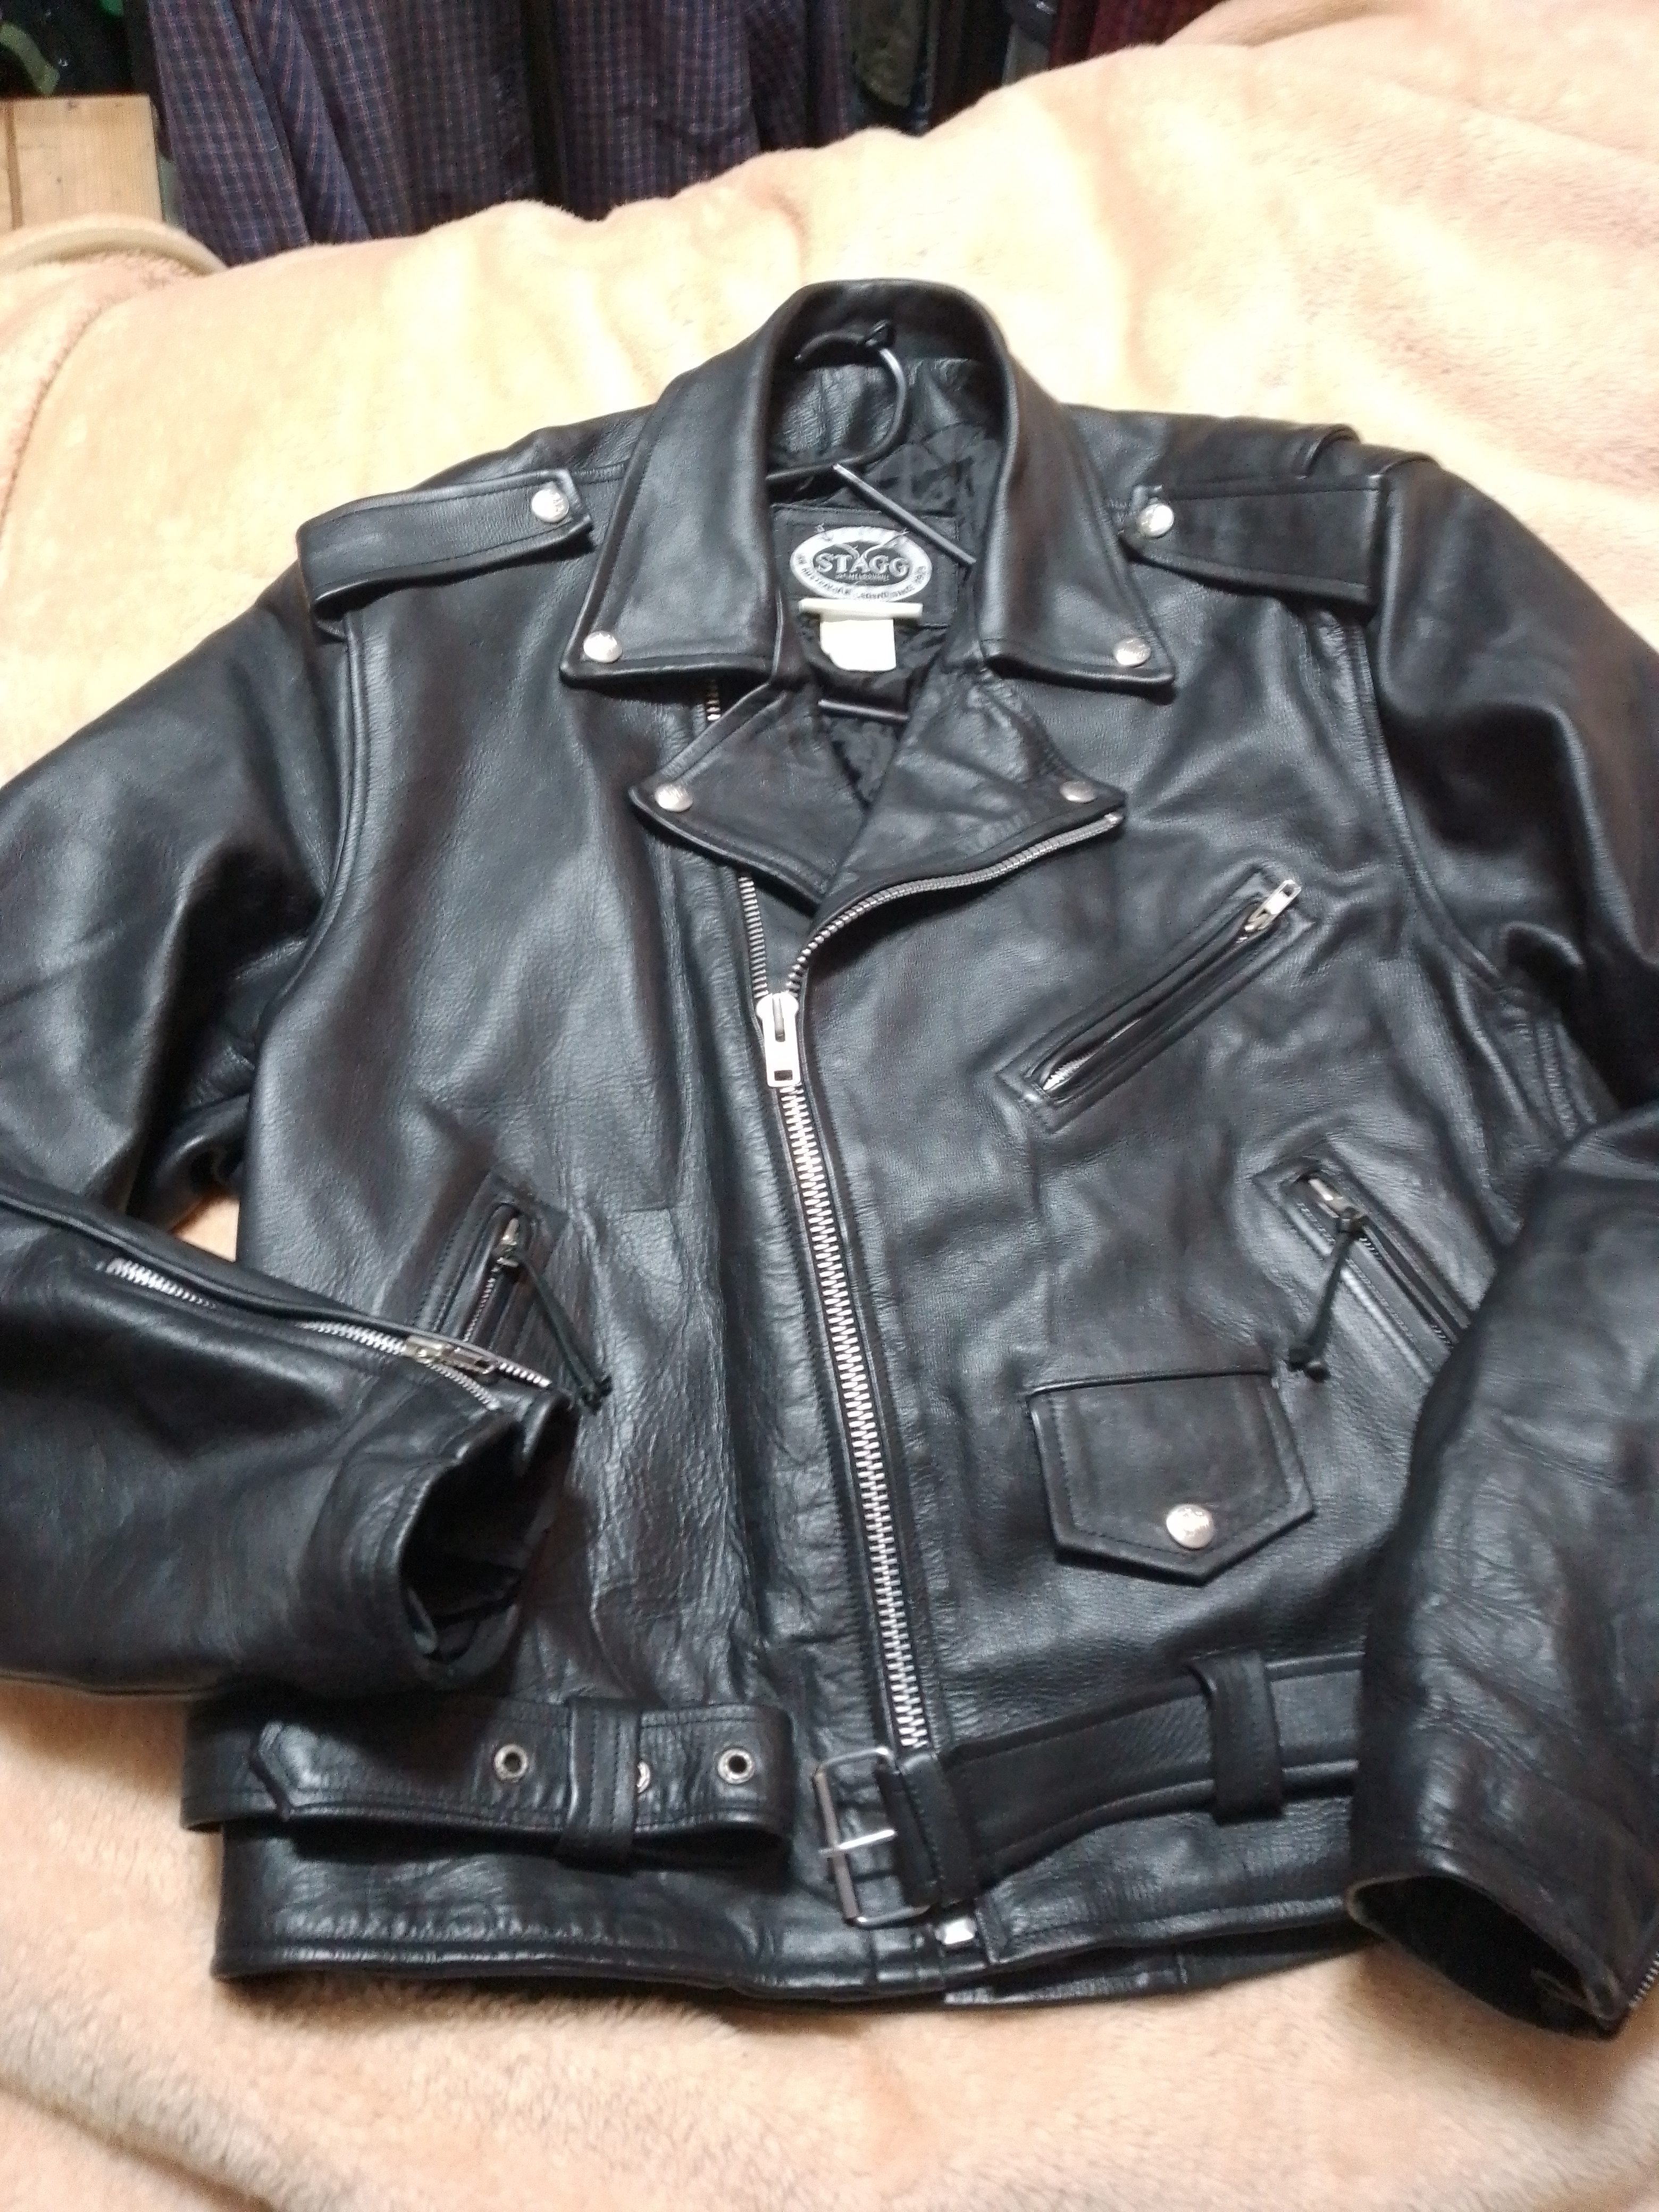 Stagg Brando jacket.jpg